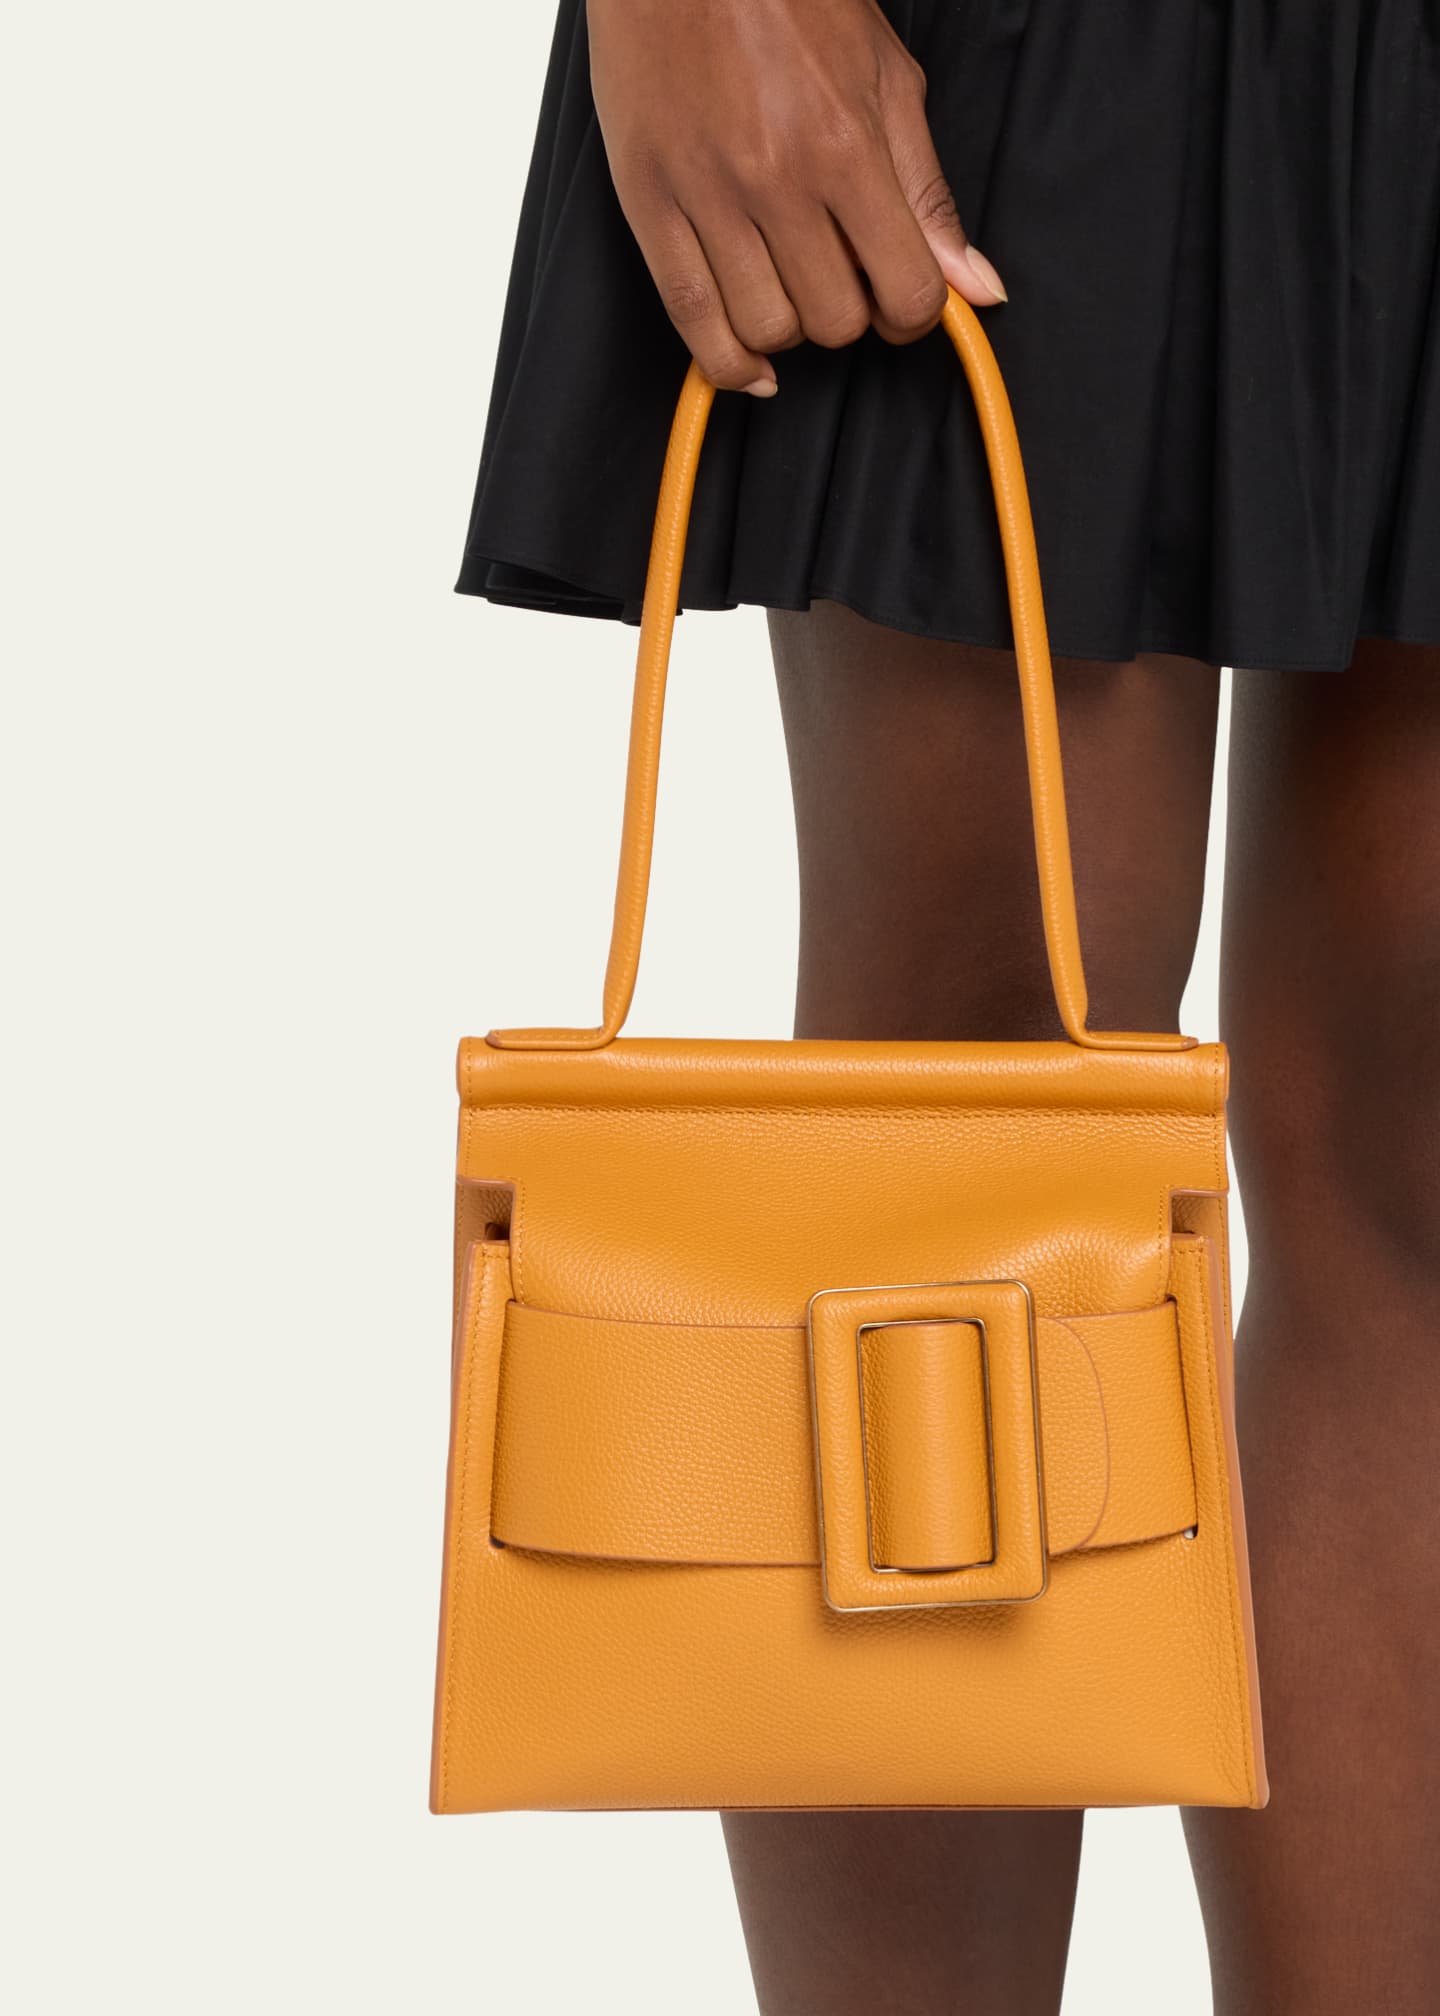 Boyy Cross-body Bag in Orange